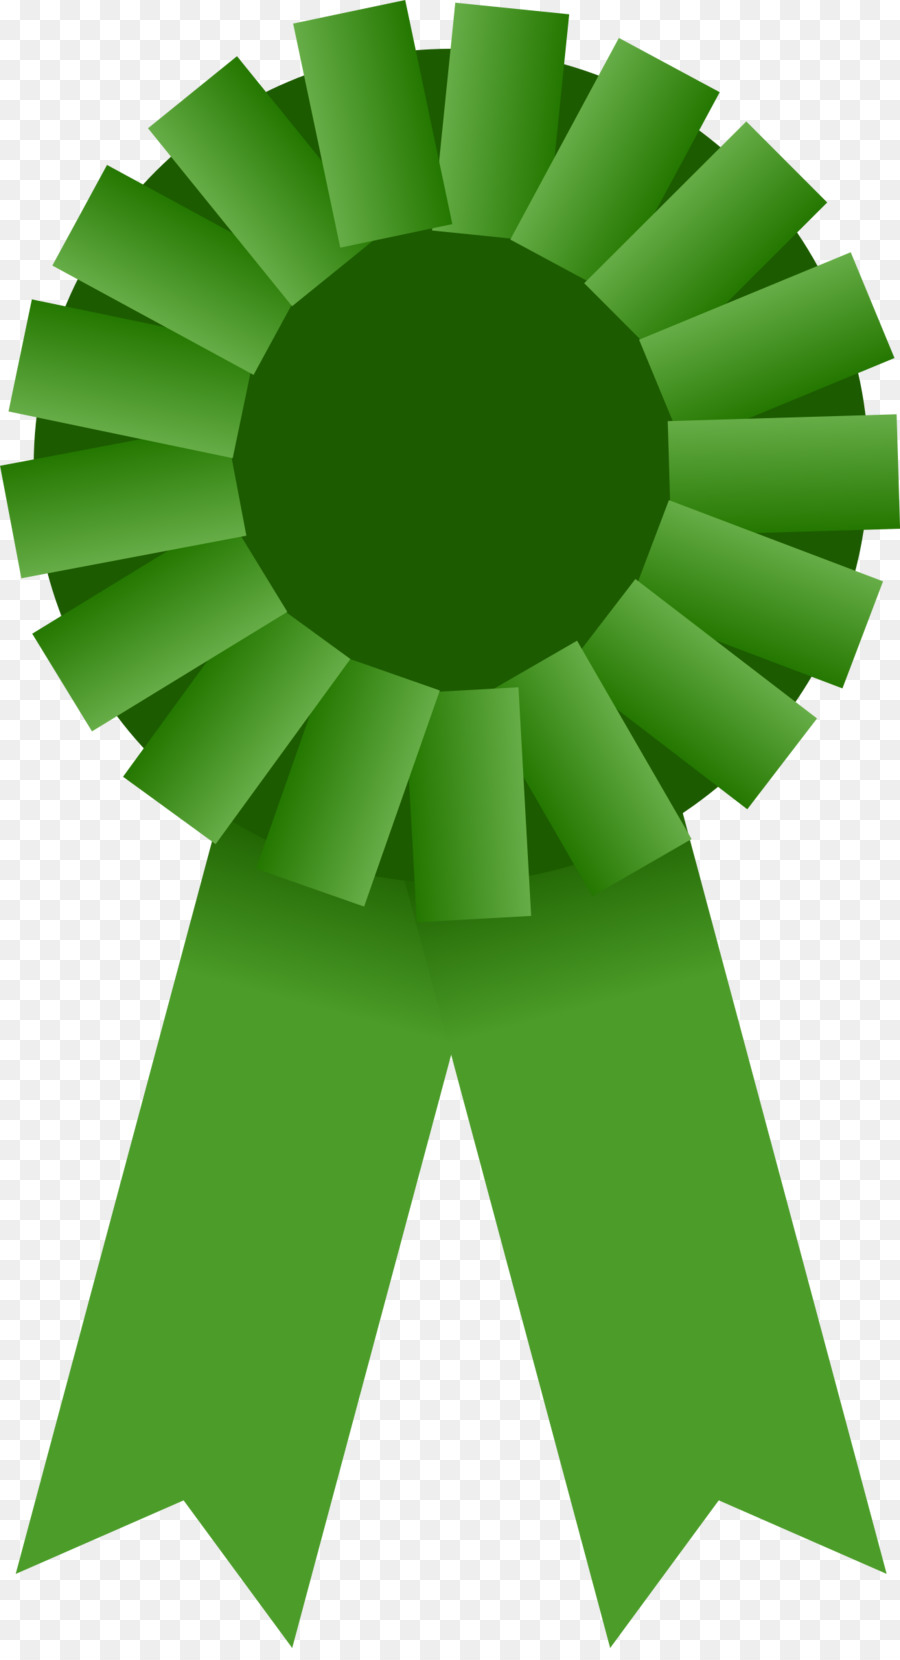 Green ribbon Medal Christian Clip Art Clip art - ribbon png download - 1311*2400 - Free Transparent Ribbon png Download.